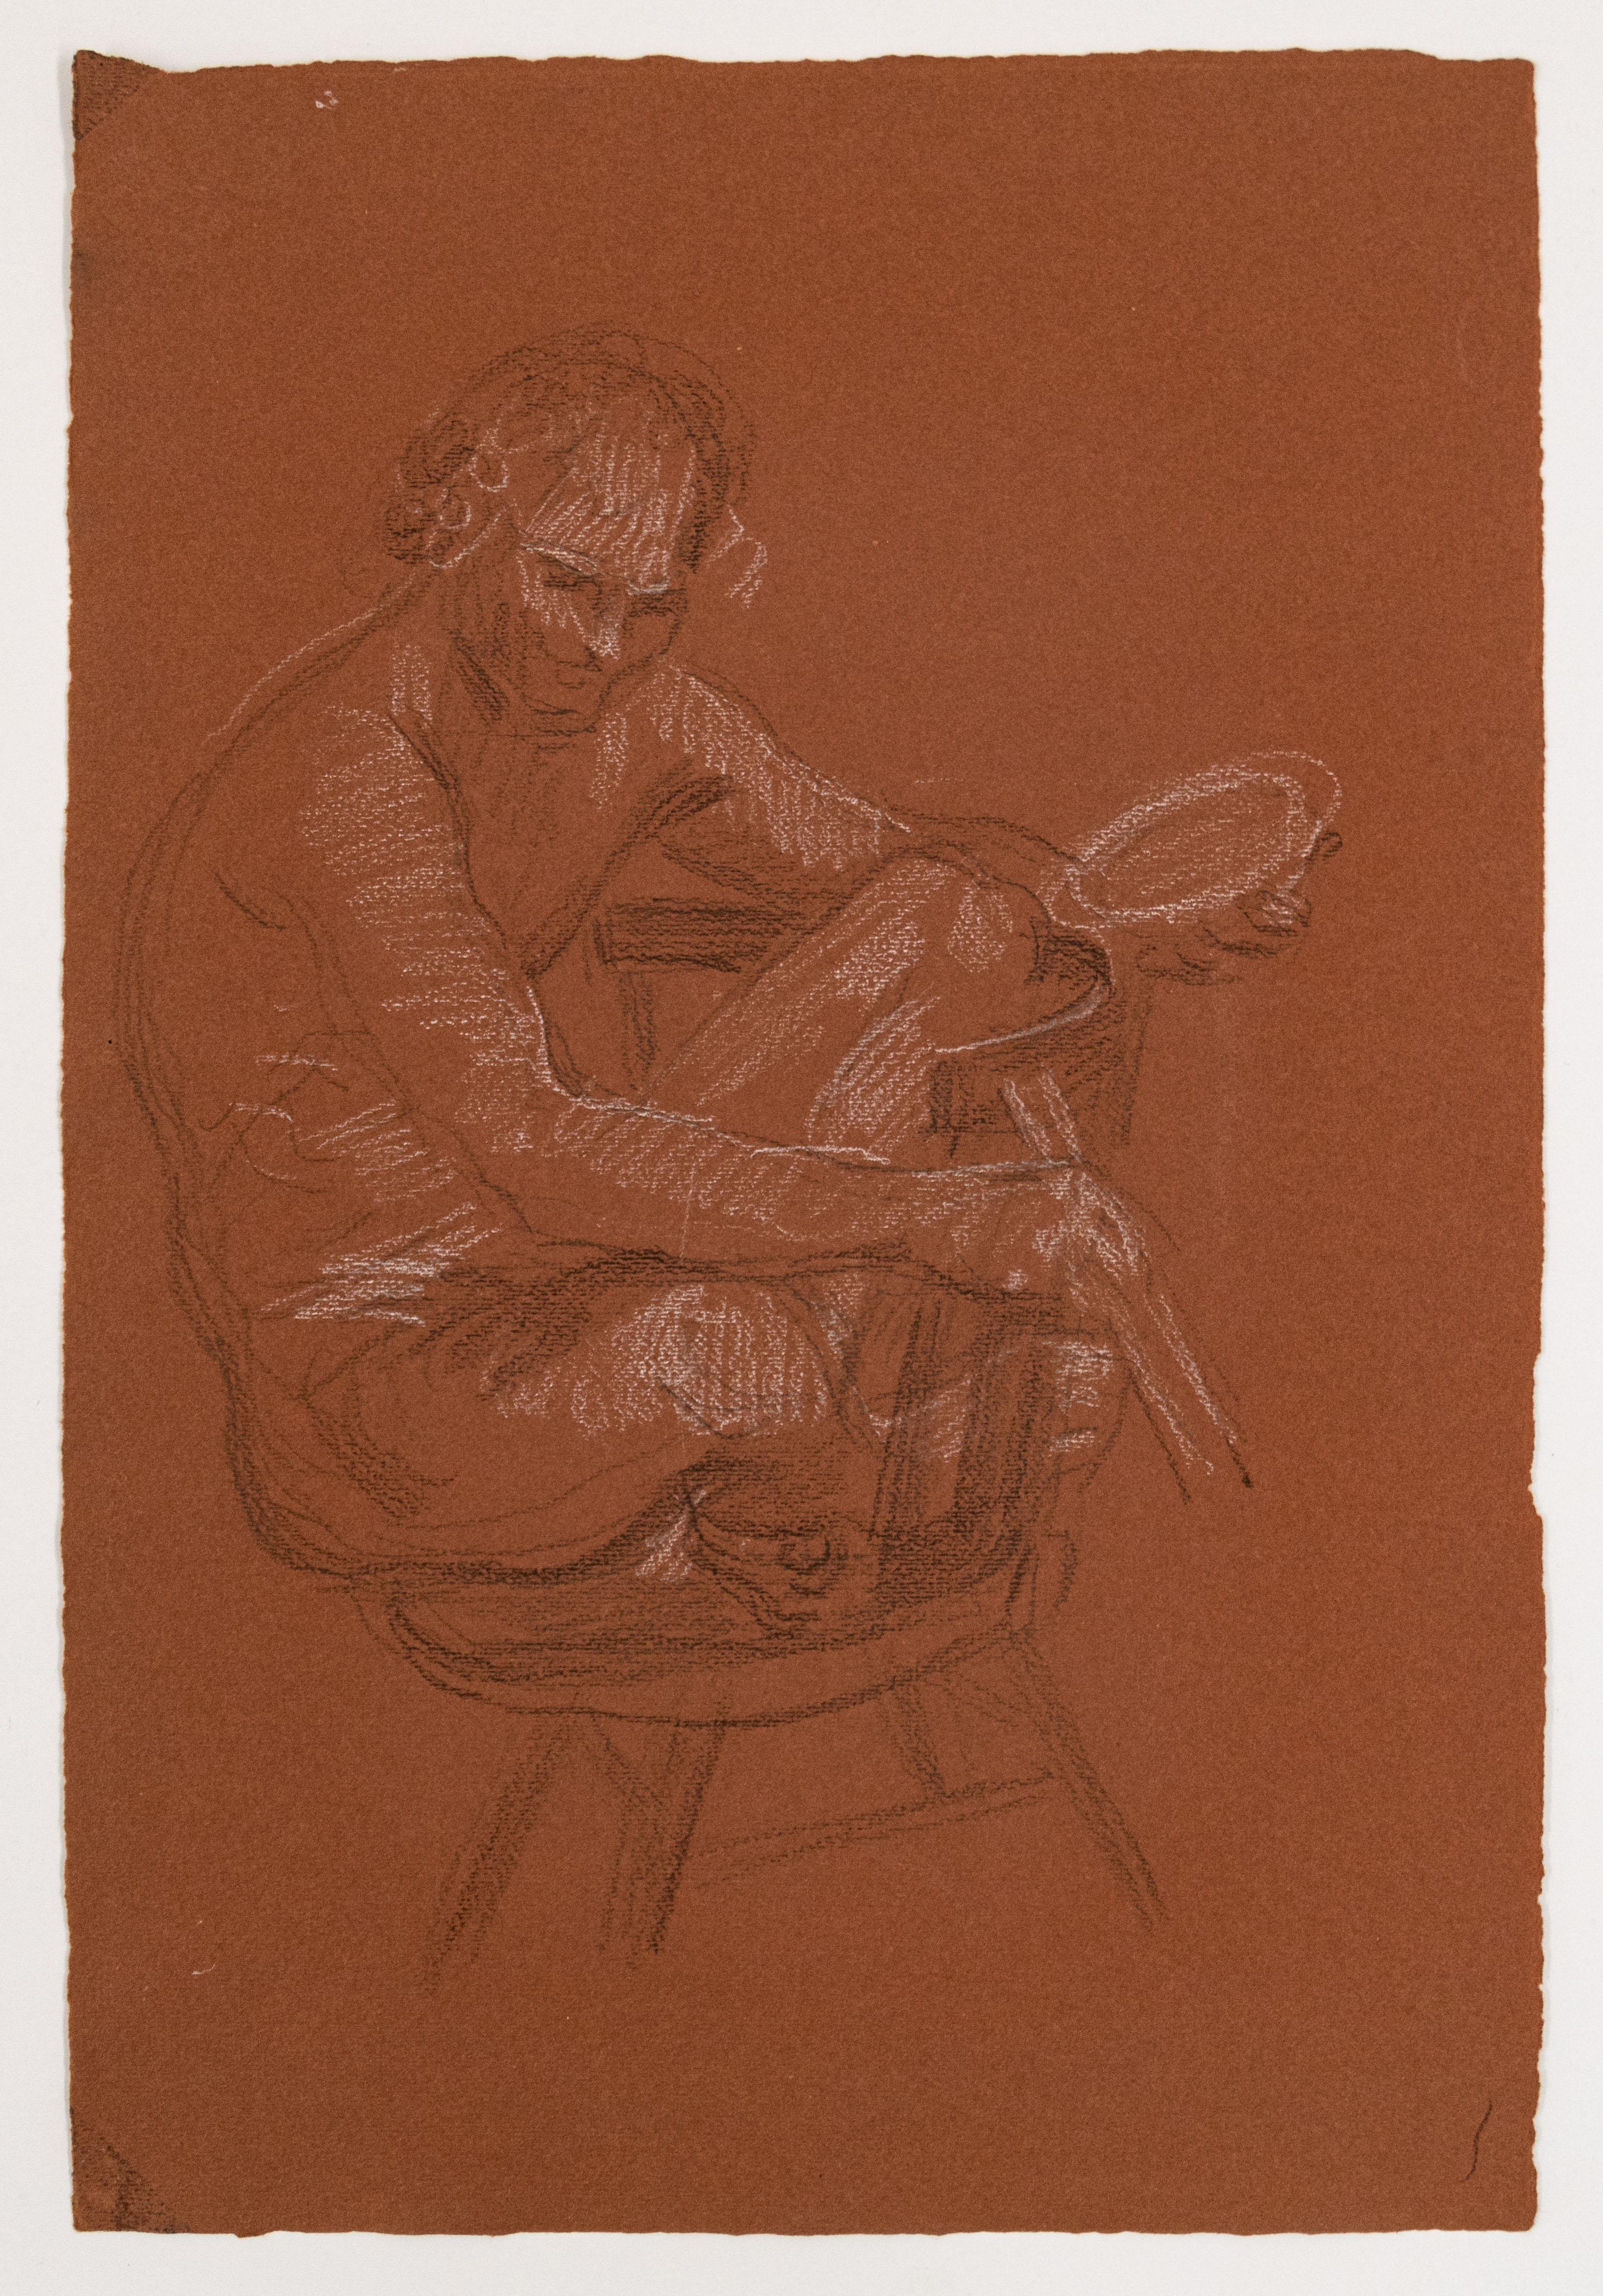 Paul Cadmus Portrait - Painter Crouching on a Chair